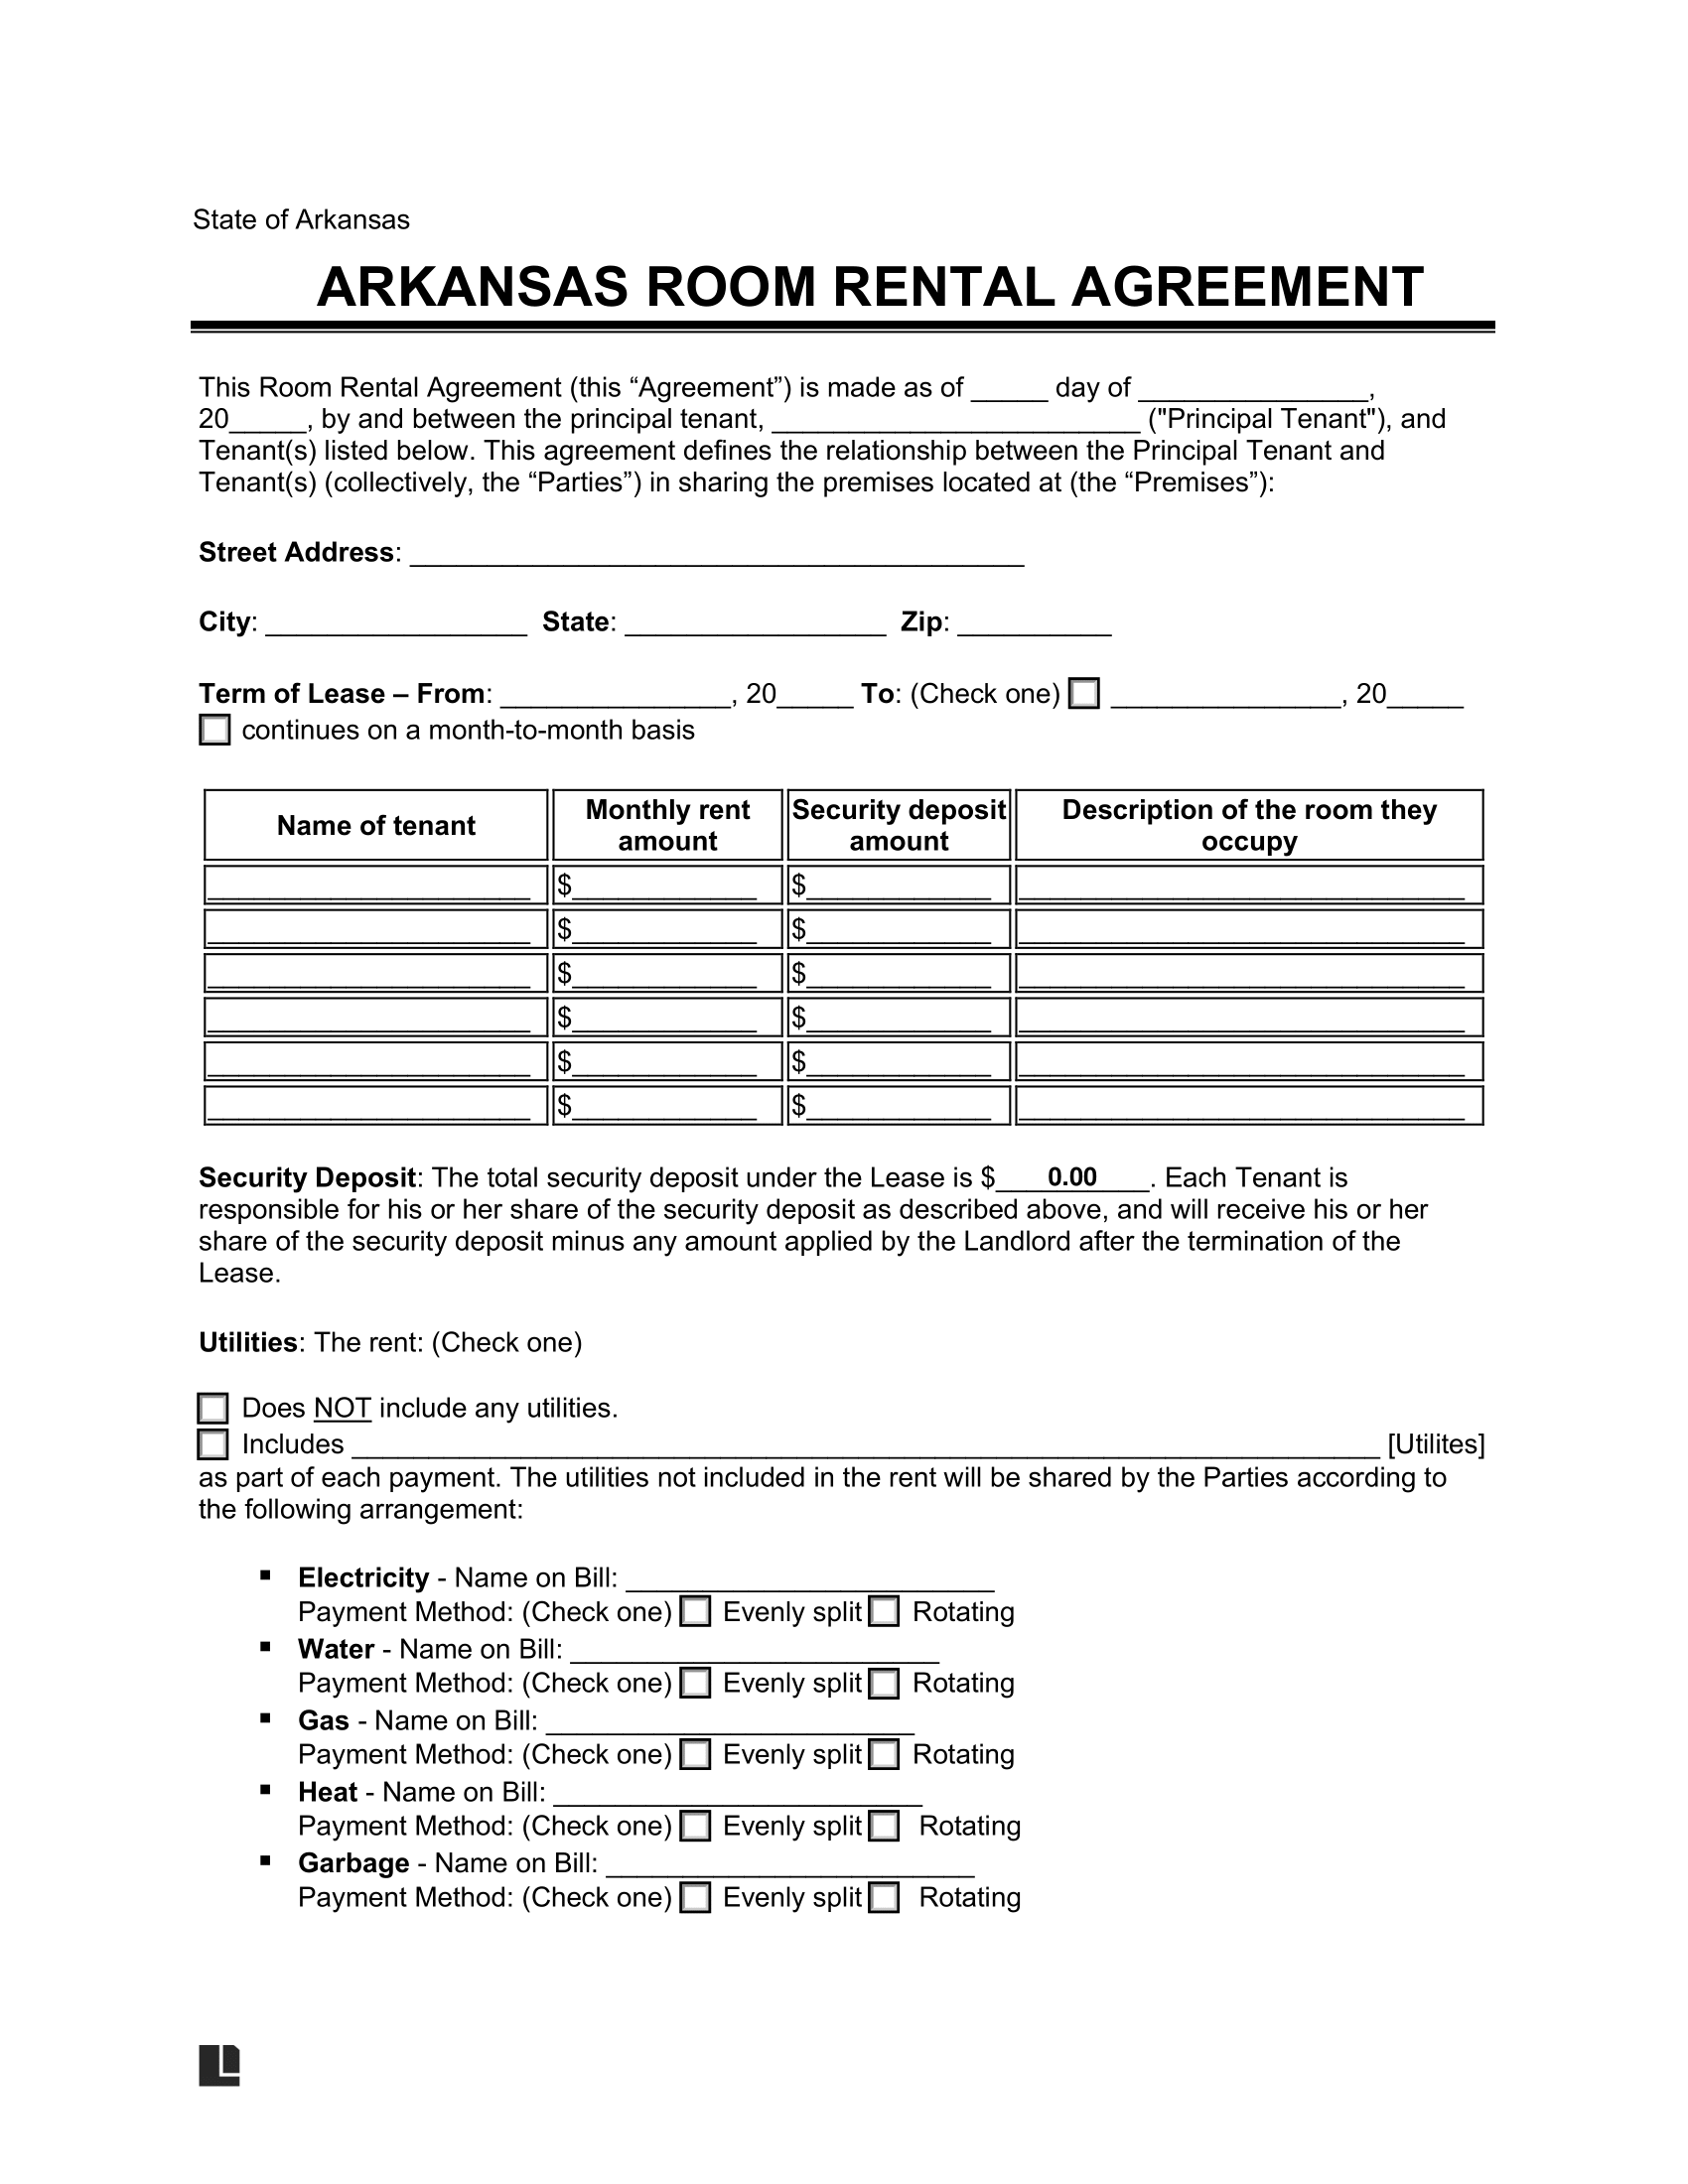 Arkansas Room Rental Agreement